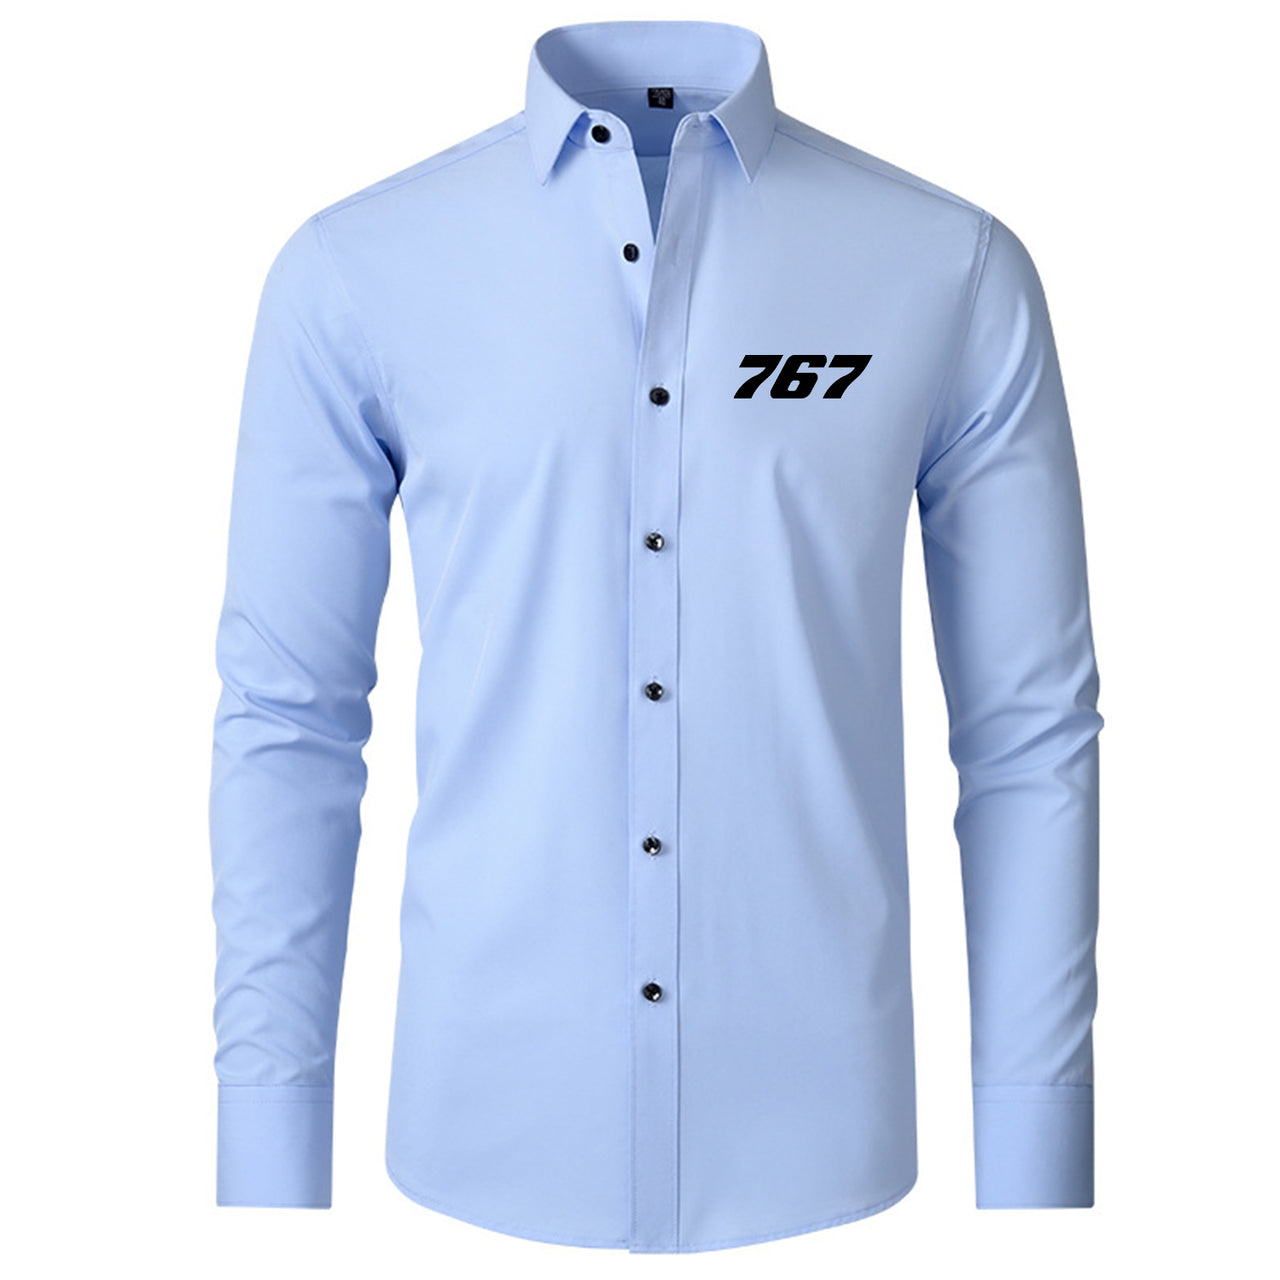 767 Flat Text Designed Long Sleeve Shirts